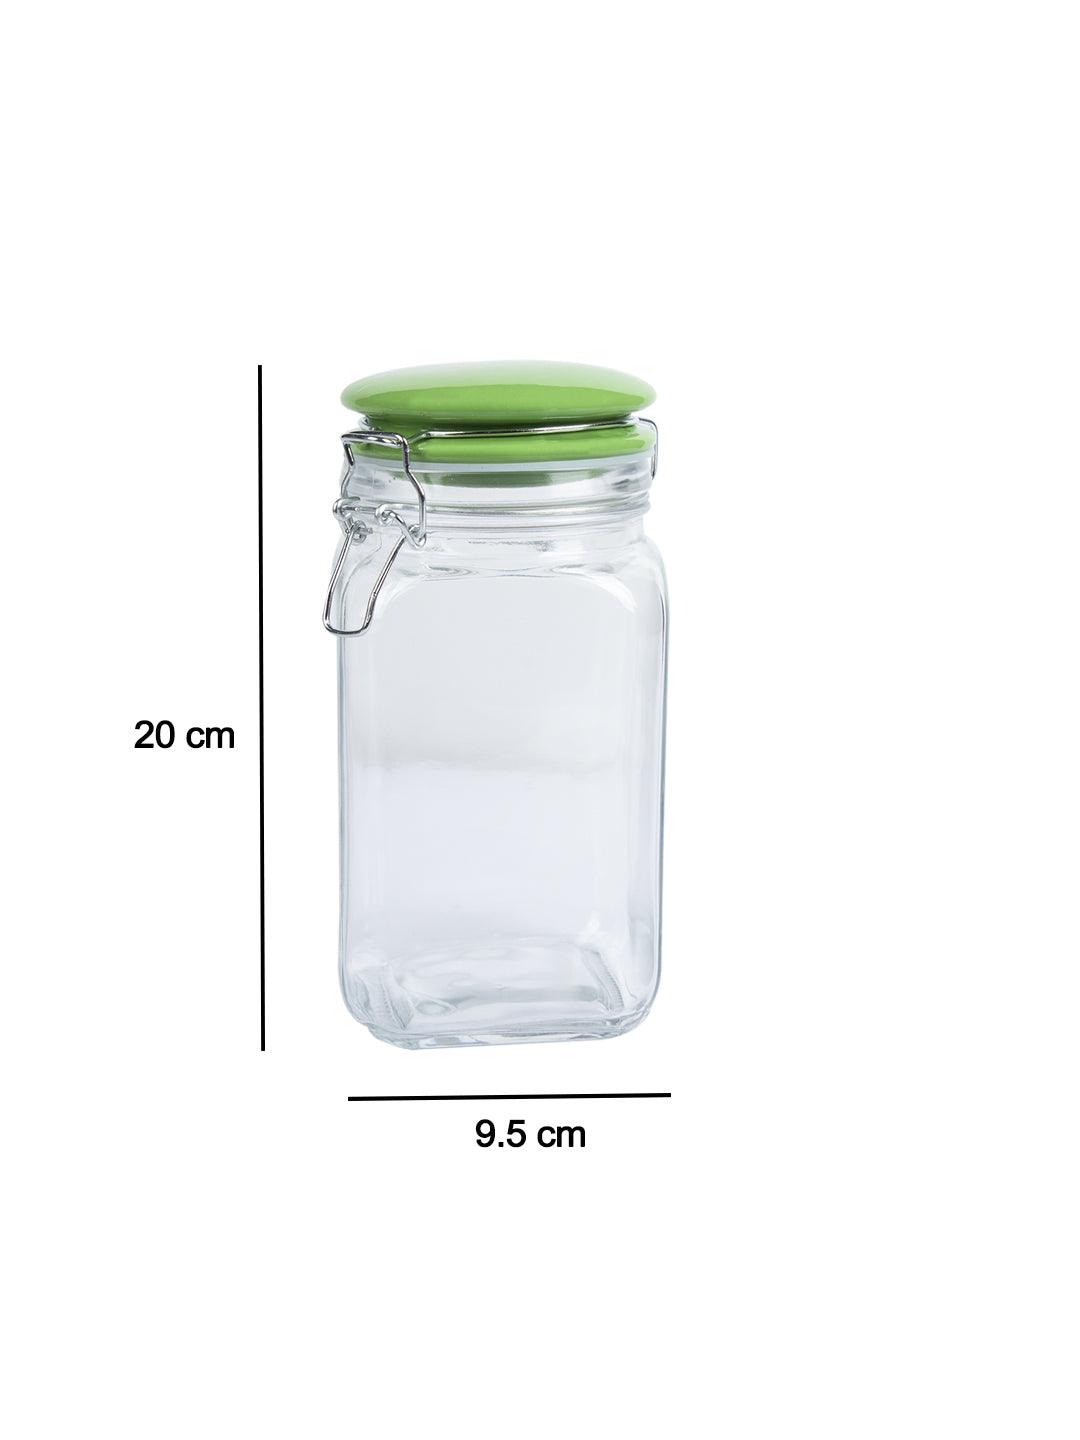 Glass Jar With Green Ceramic Lid - 1200 Ml - MARKET 99